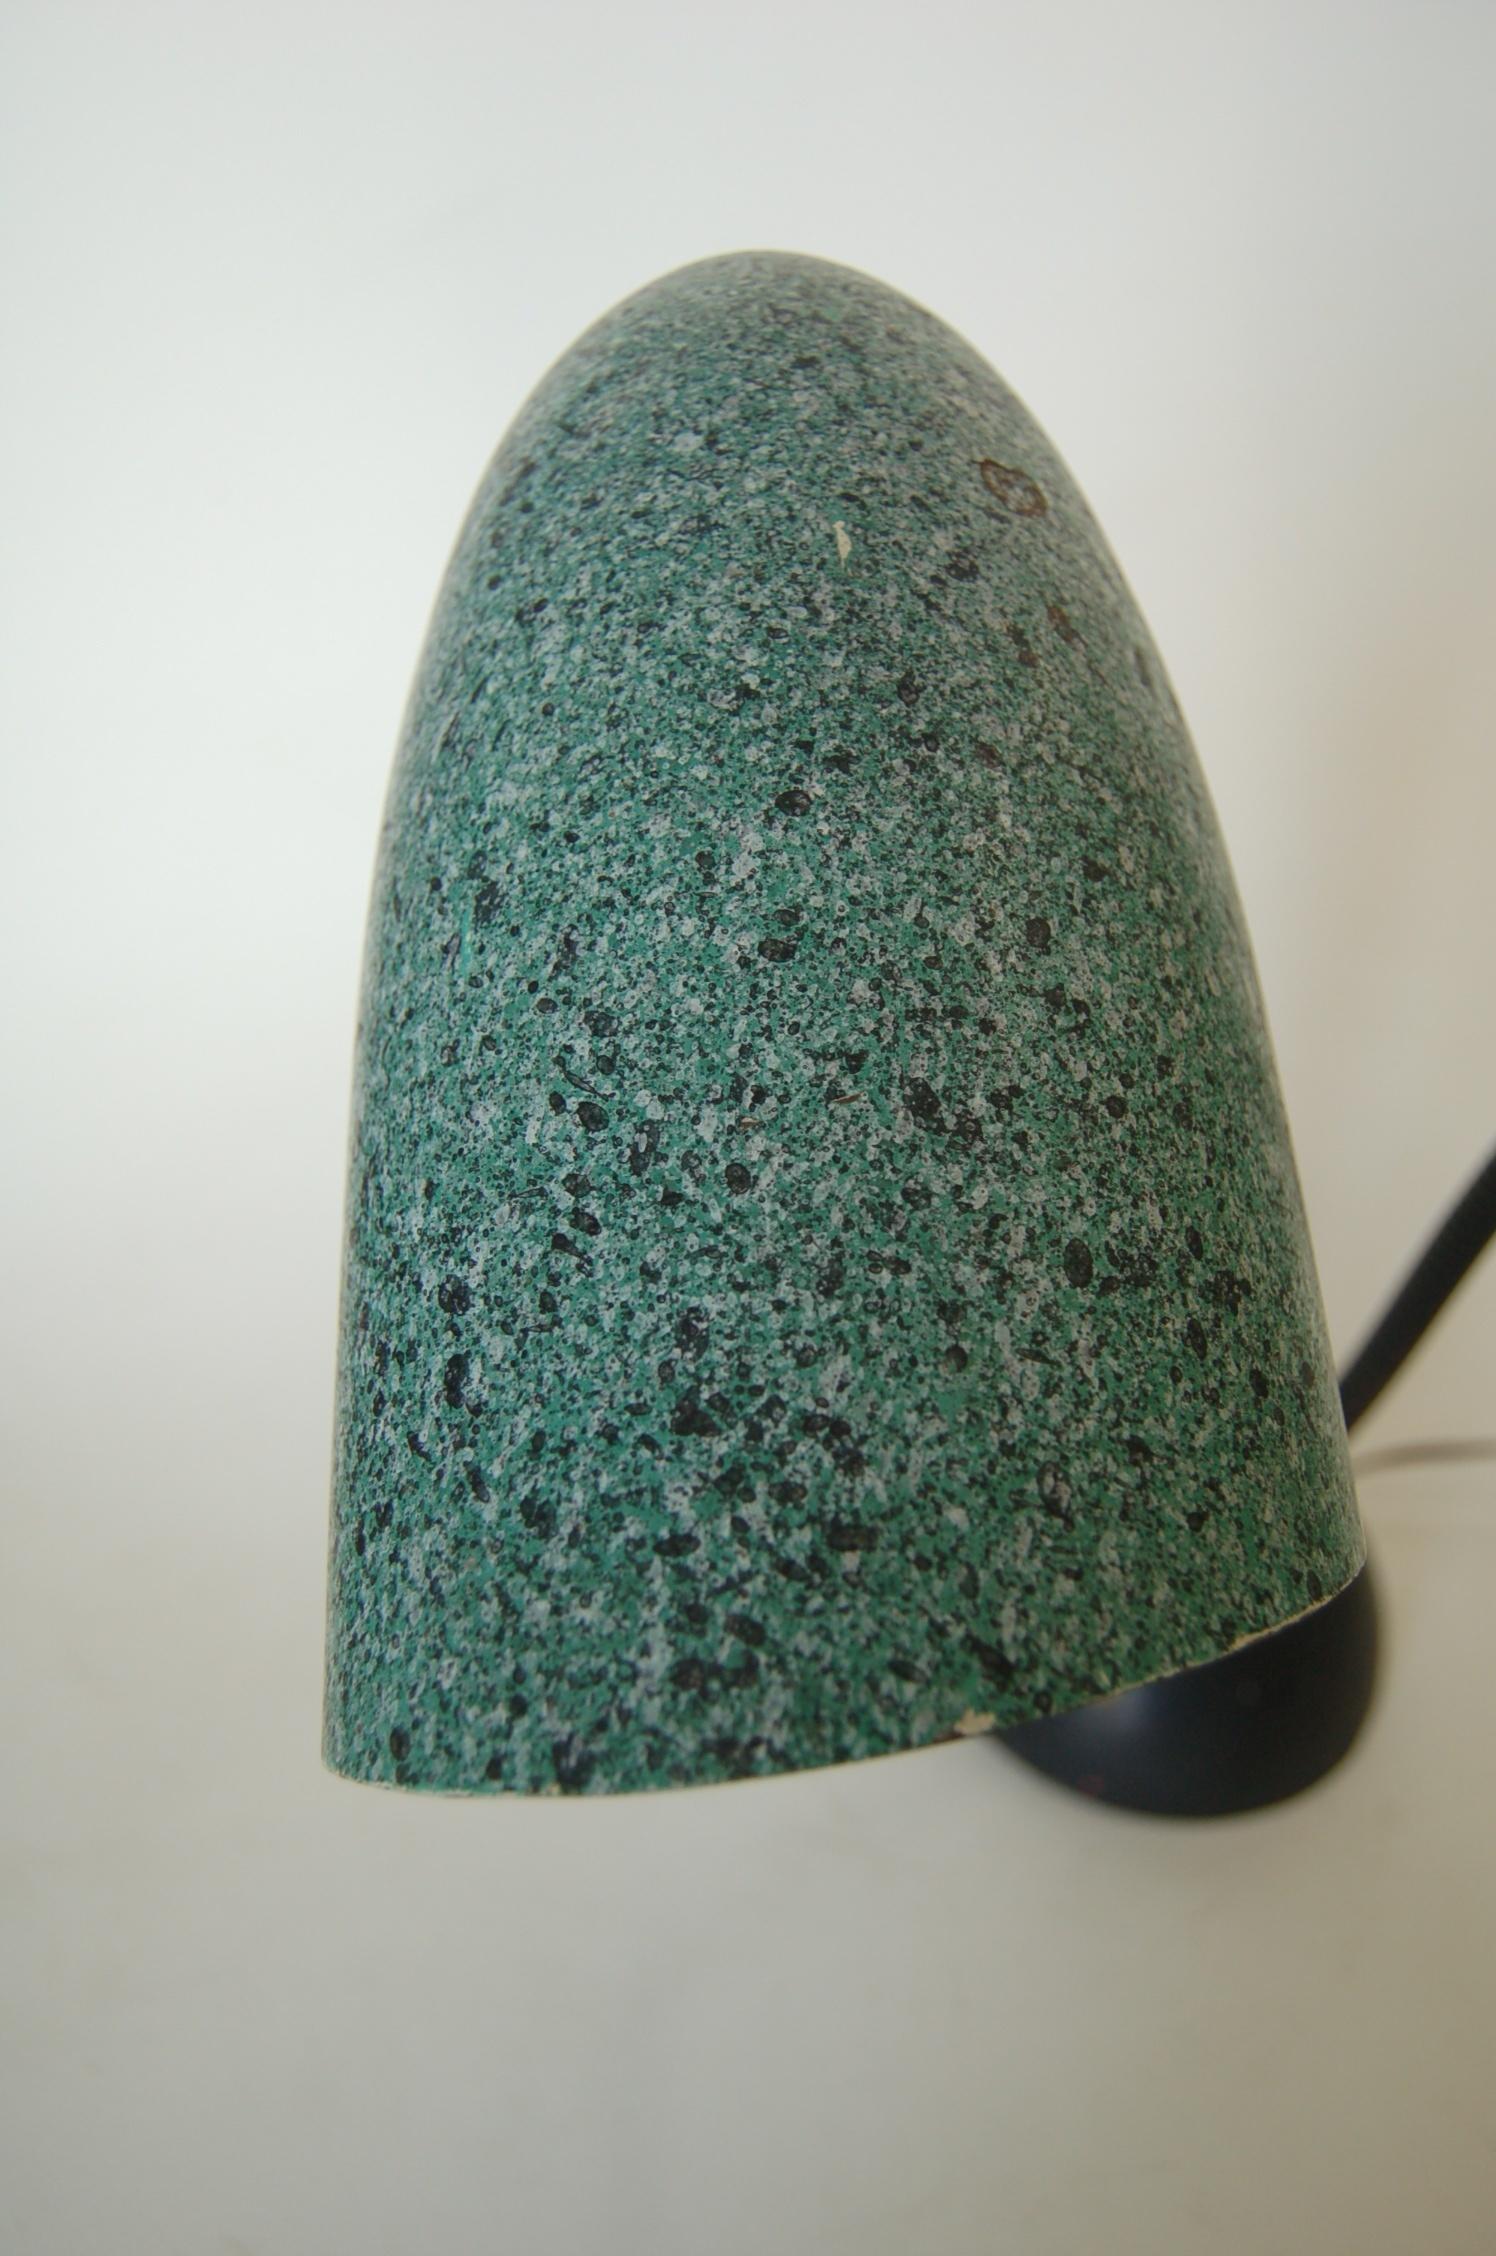 American Modernist Green Speckle Double Gooseneck Desk Table Lamp For Sale